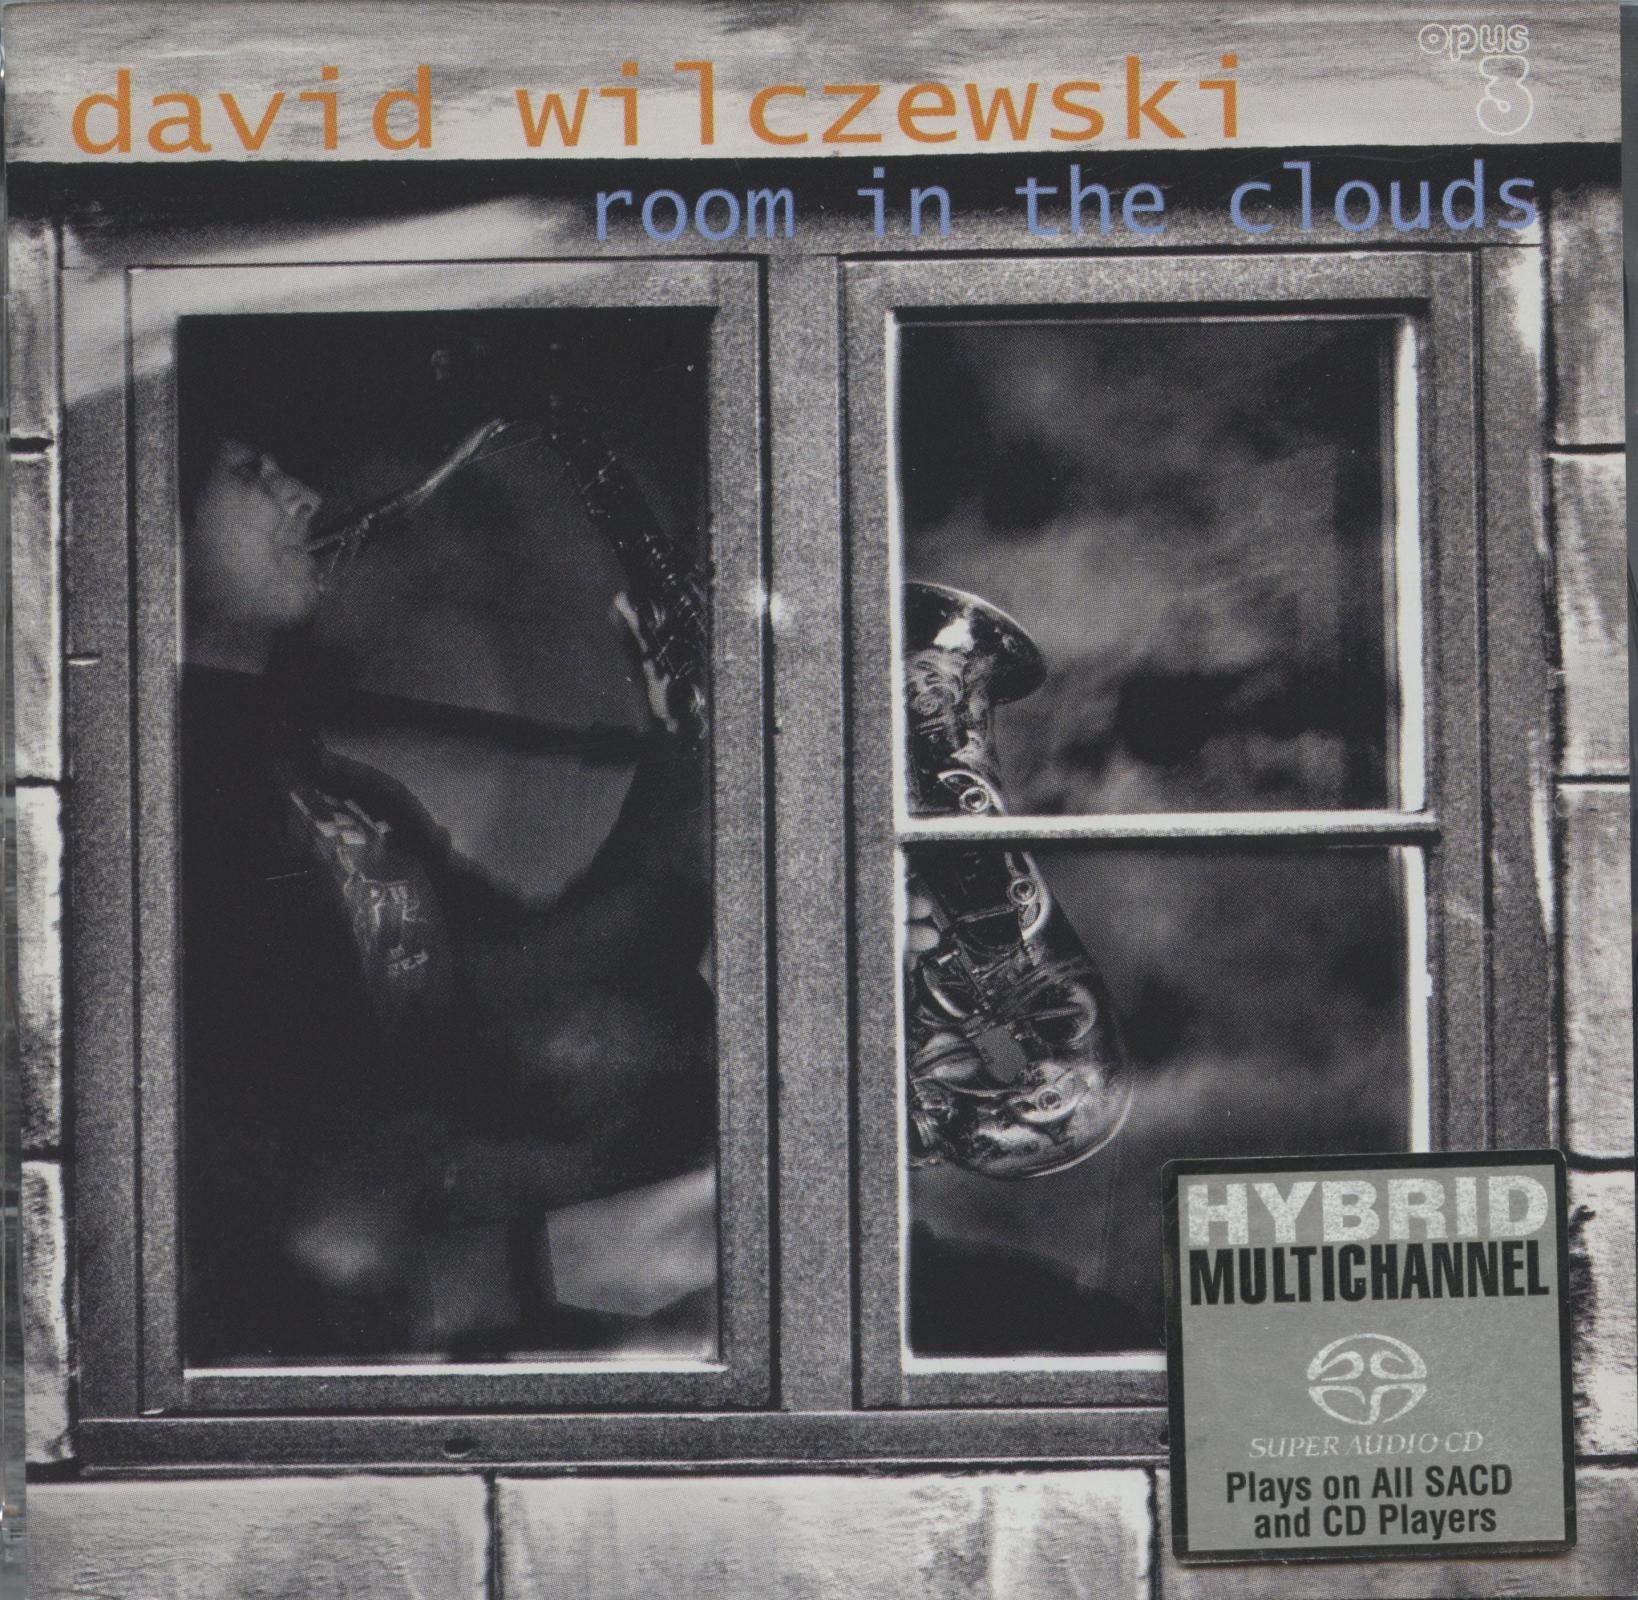 David flac. Дэвид Вильчевски.. Joe Beck Trio. The cloud Room album.